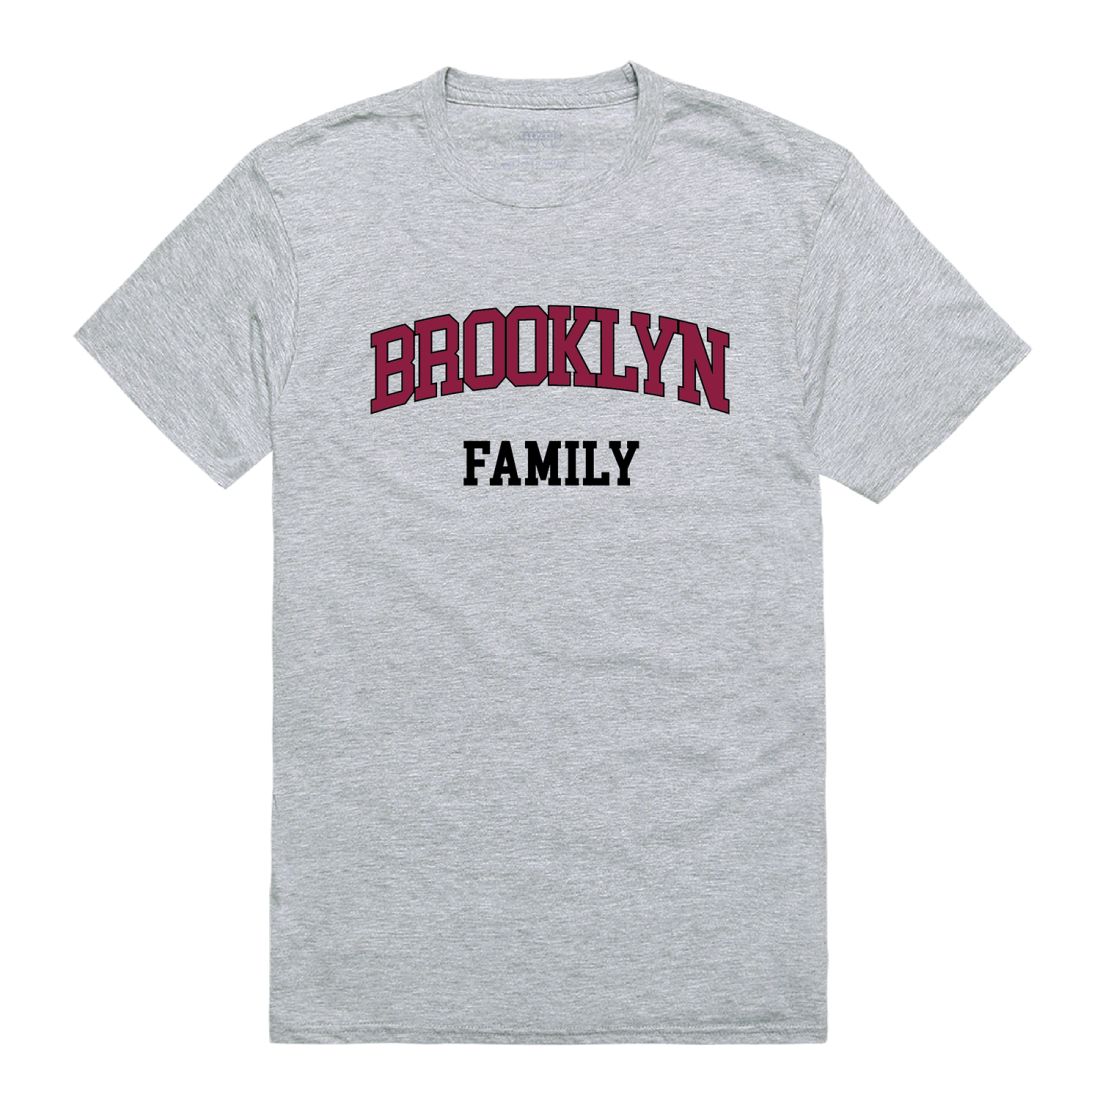 Brooklyn College Bulldogs Family T-Shirt